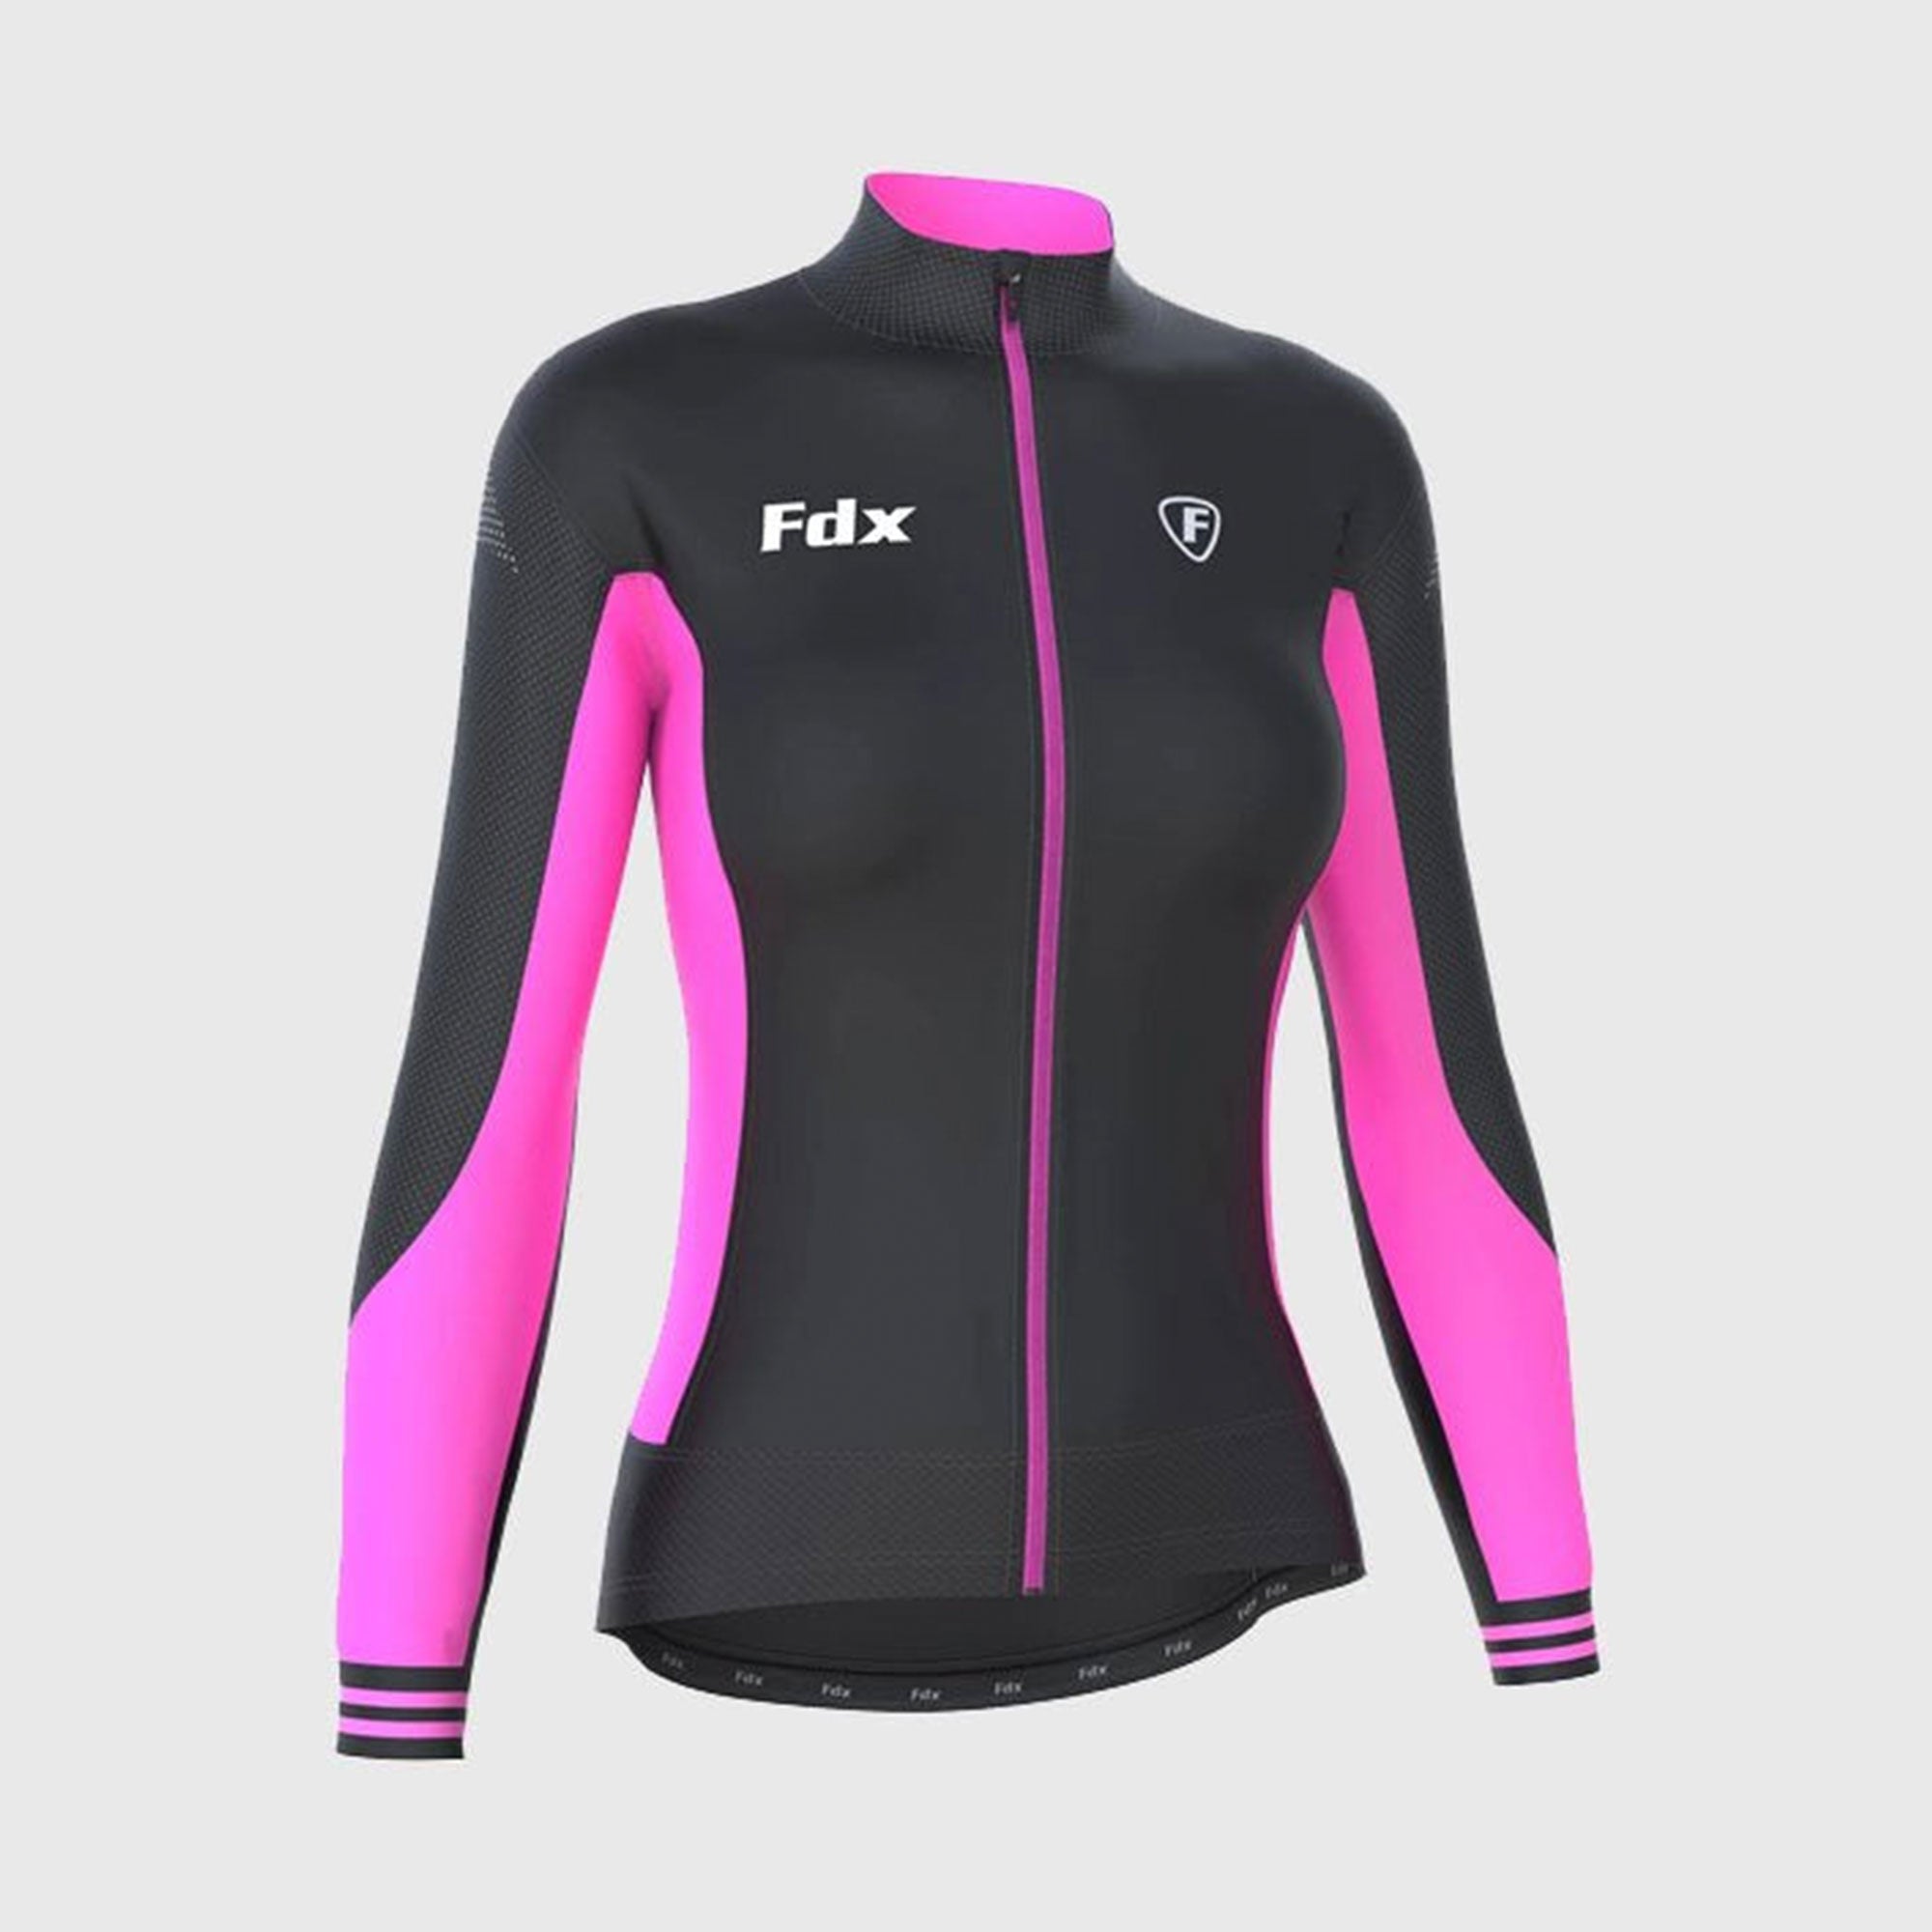 Fdx Best Women's Black & Pink Long Sleeve Cycling Jersey for Winter Roubaix Thermal Fleece Shirt Road Bike Wear Top Full Zipper, Lightweight  Pockets & Hi viz Reflectors - Thermodream